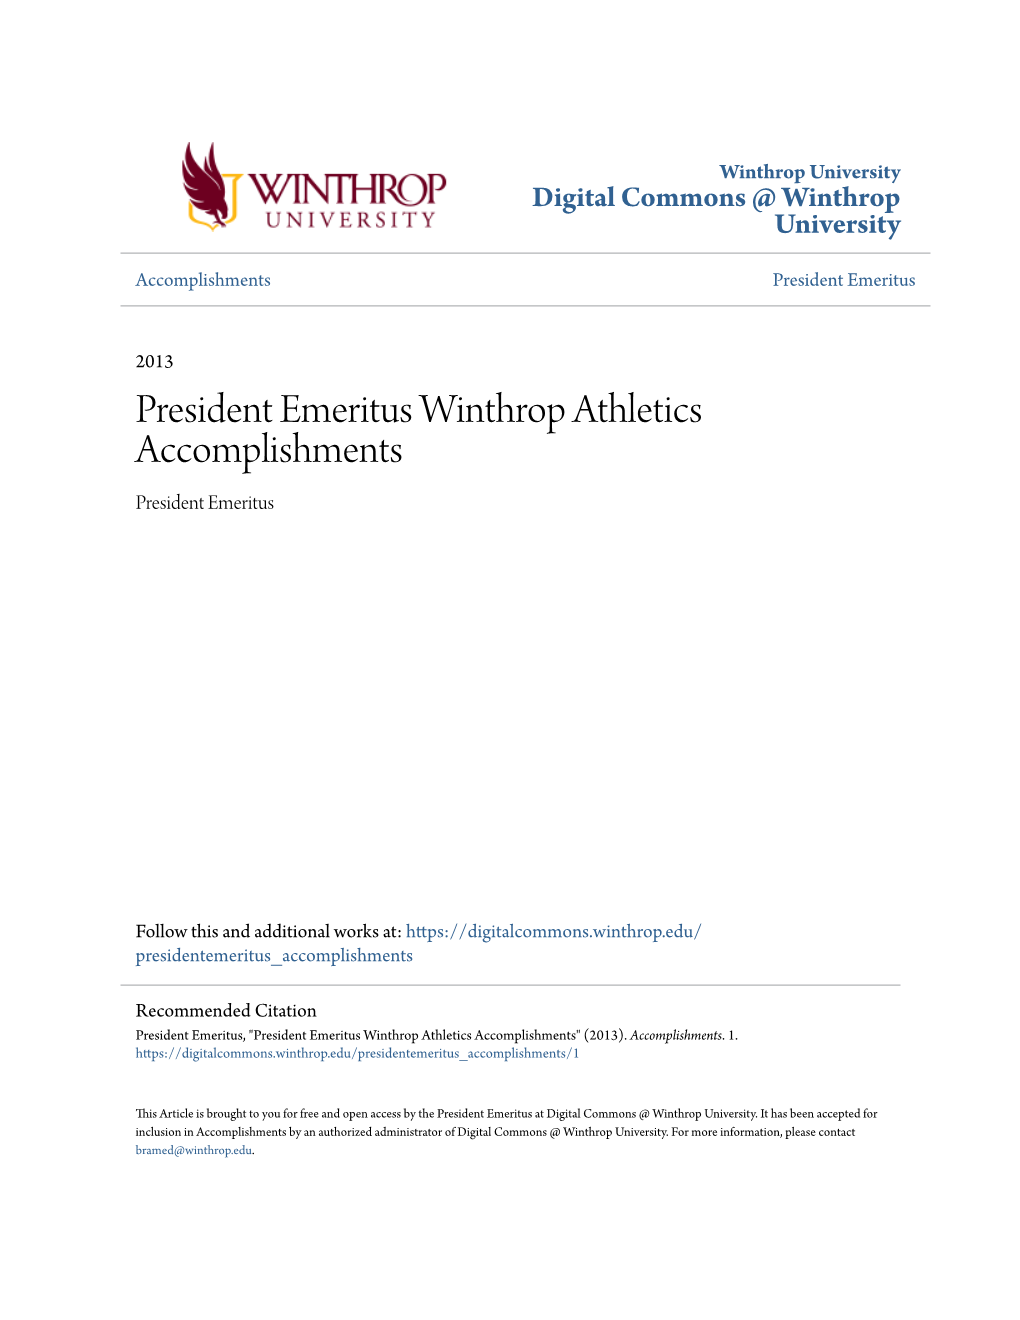 President Emeritus Winthrop Athletics Accomplishments President Emeritus